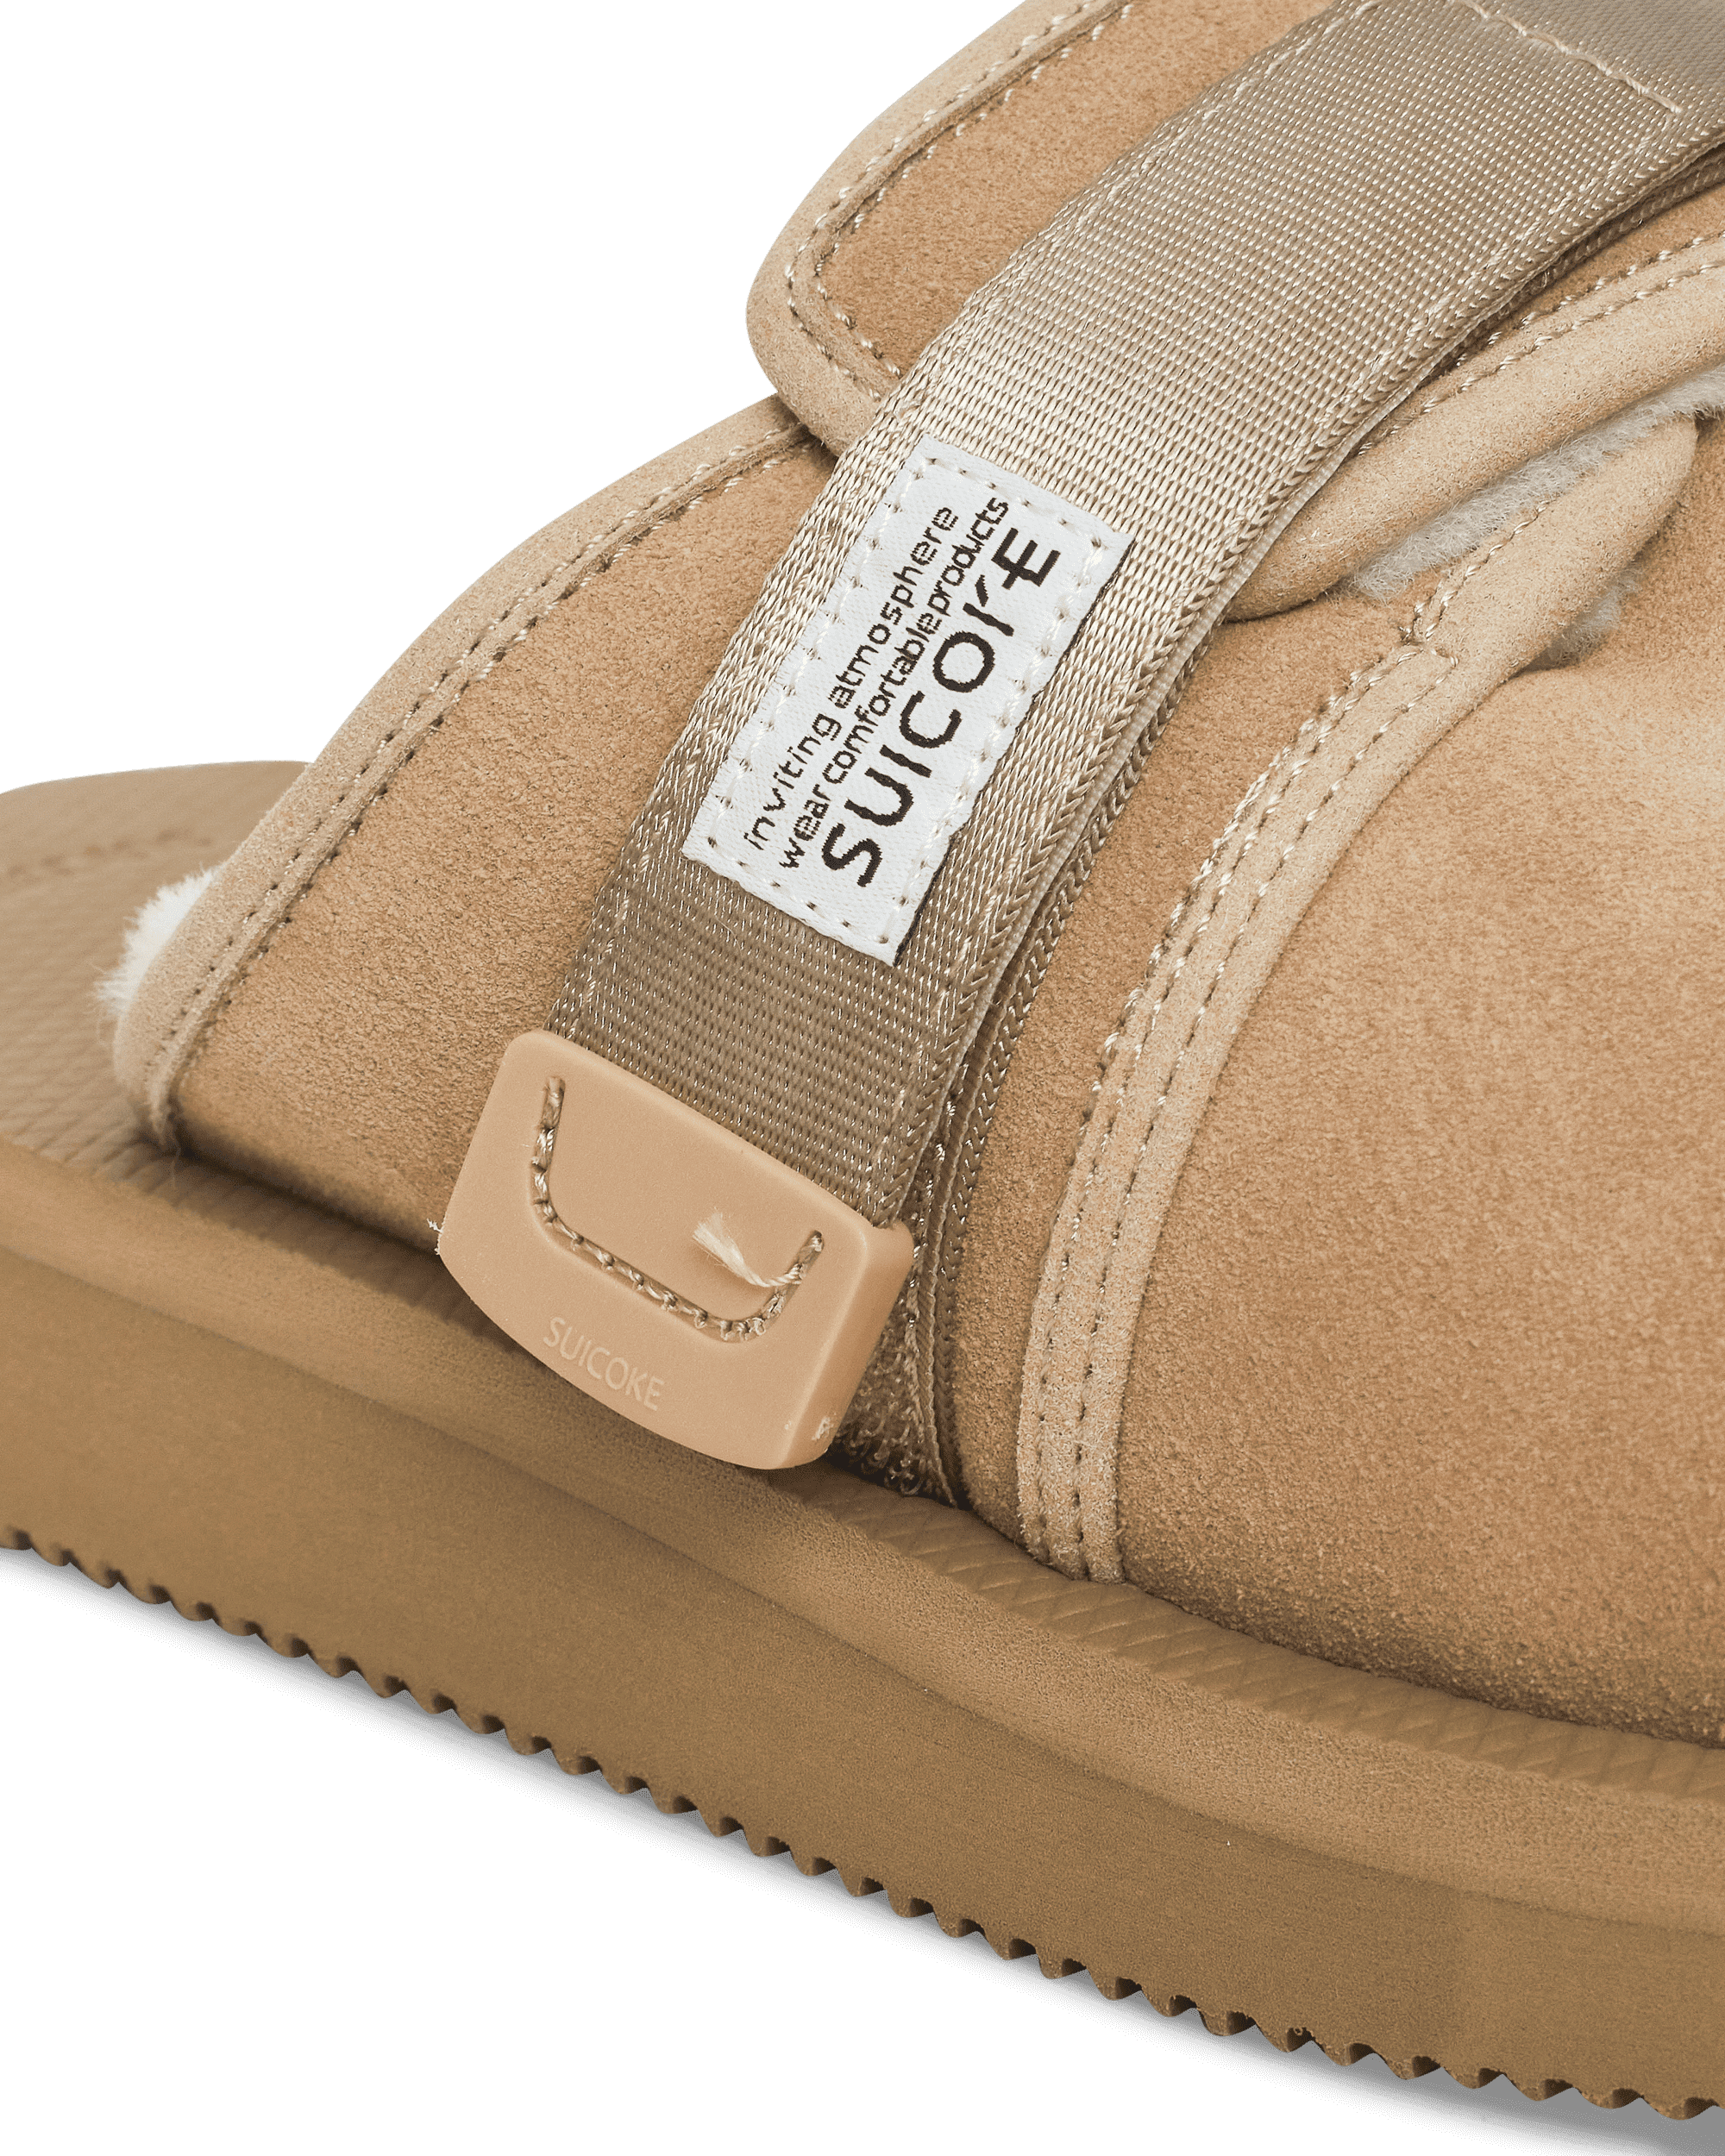 Suicoke Zavo-Mab Taupe Sandals and Slides Sandal OG-072Mab- TUP